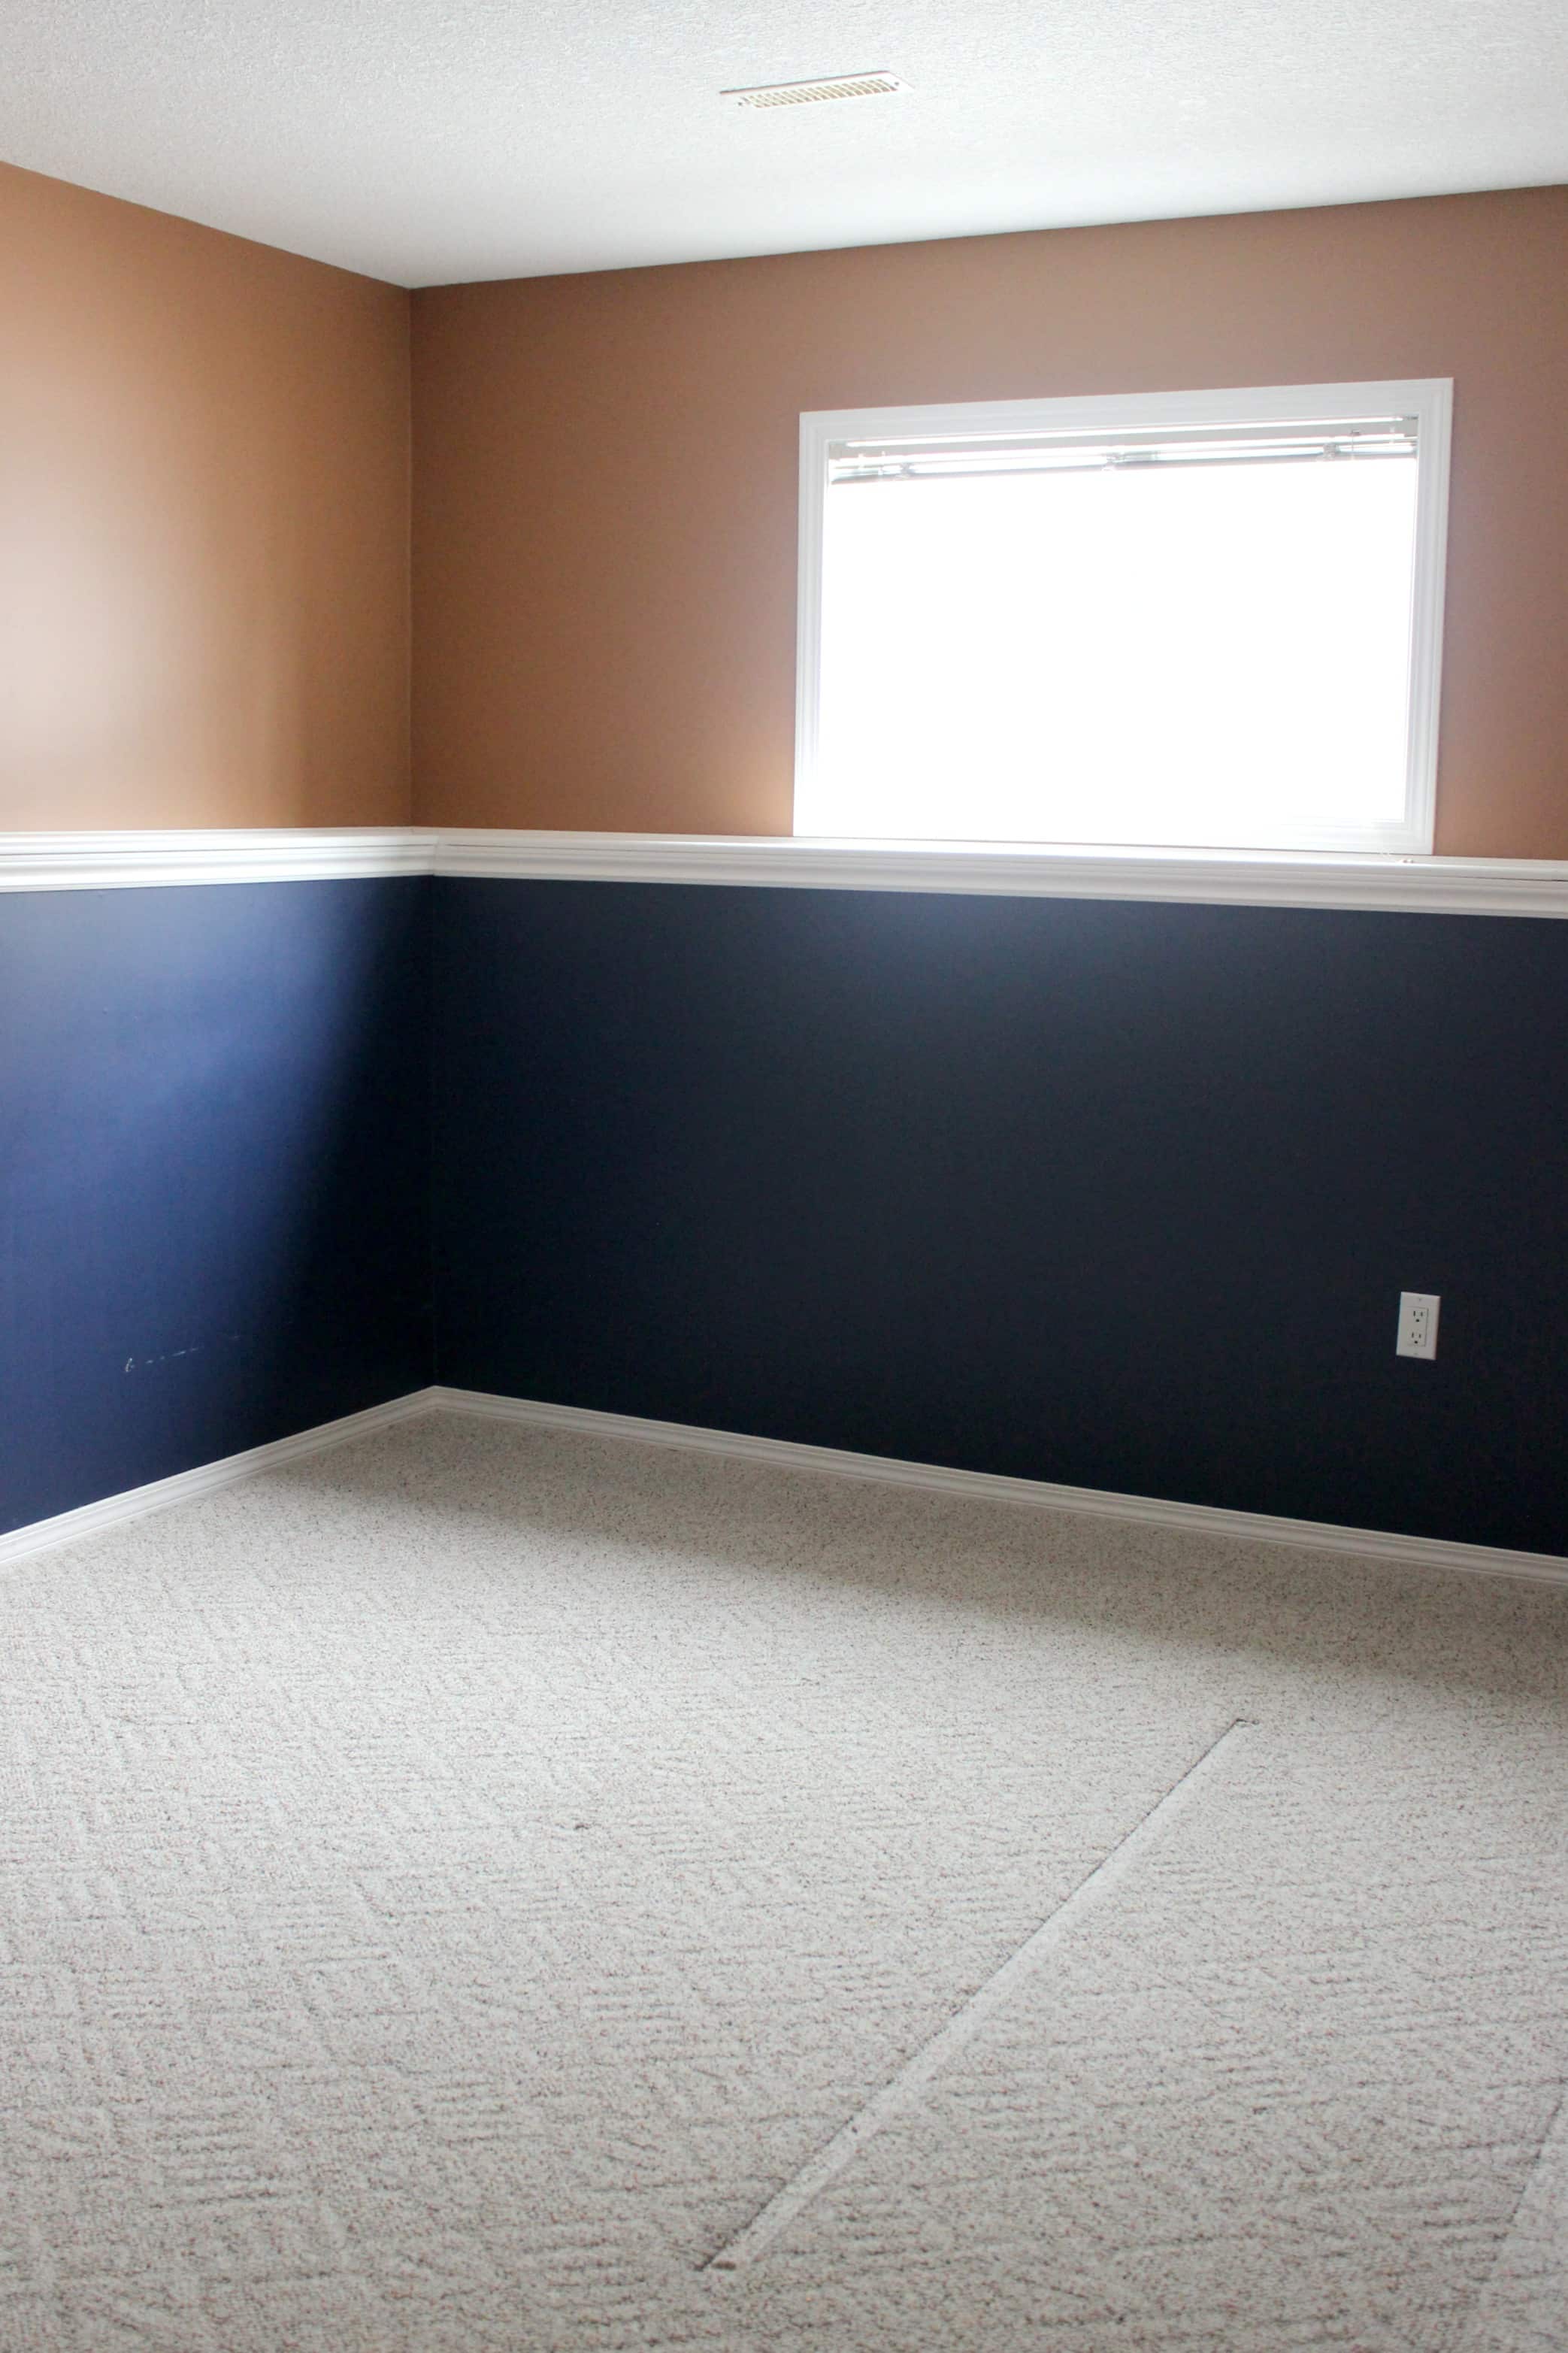 Guest bedroom before installing vinyl plank flooring